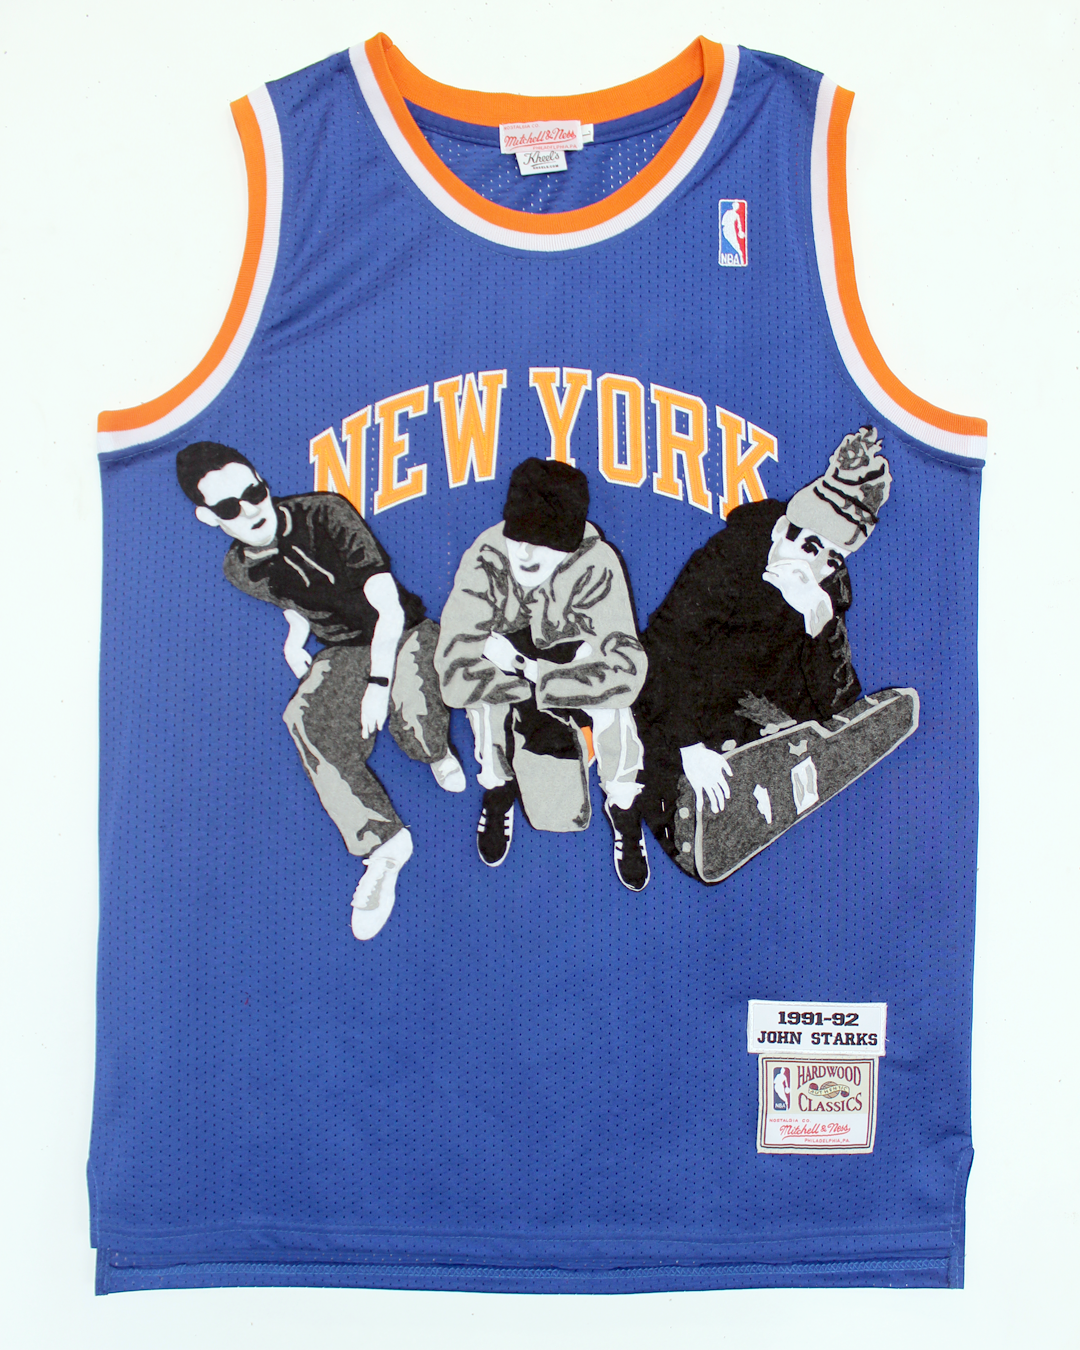 Beastie Boys New York Knicks T-Shirt